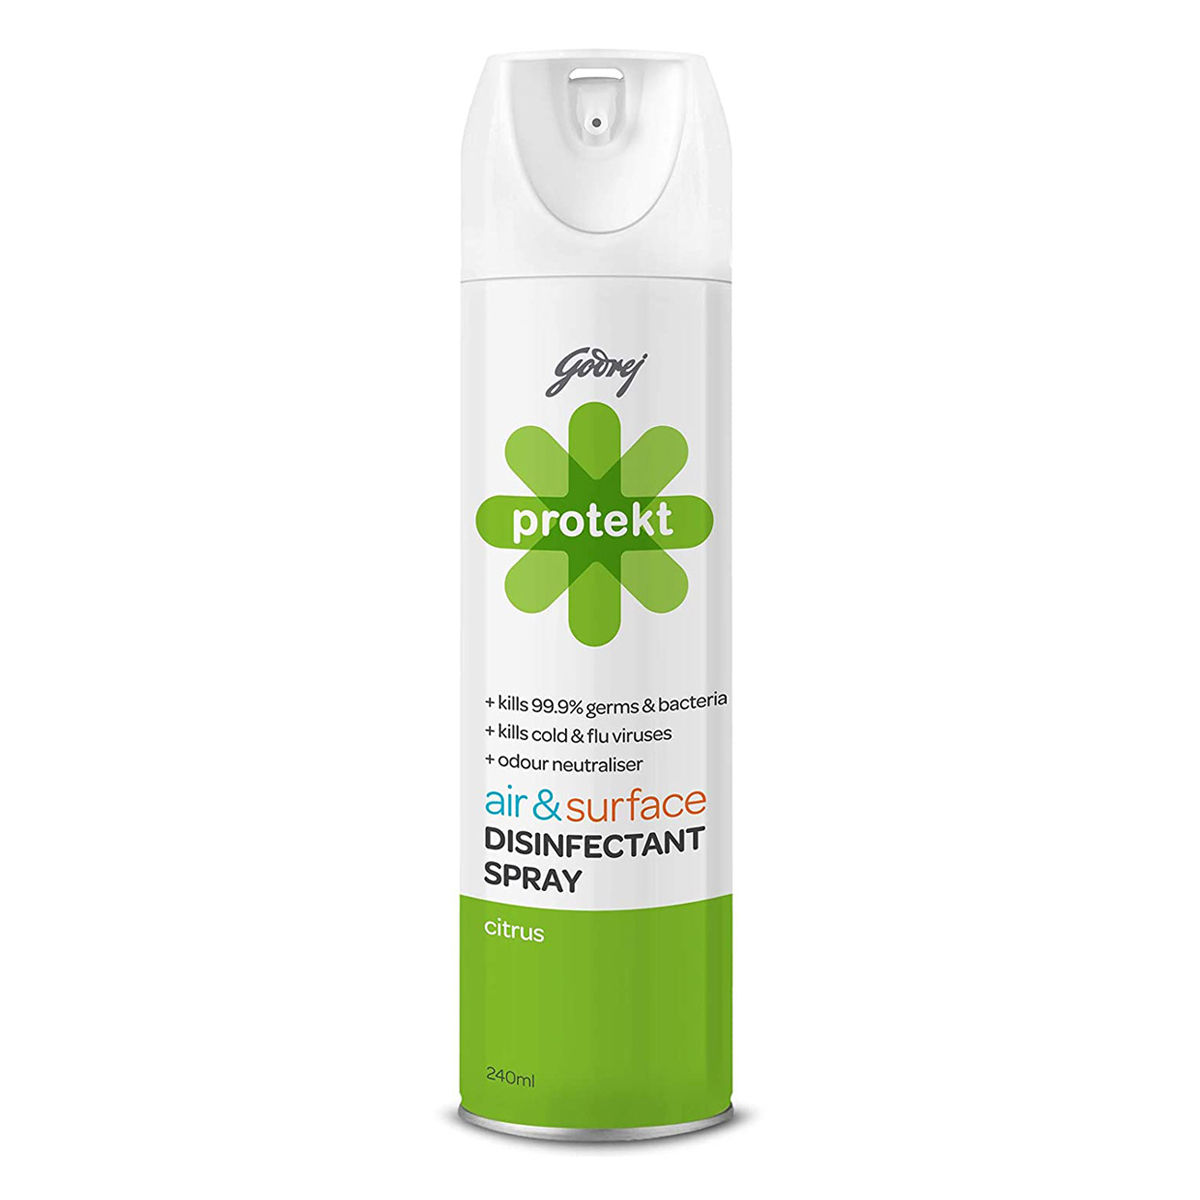 Buy Godrej Protekt Air & Surface Disinfectant Citrus Spray, 240 ml Online